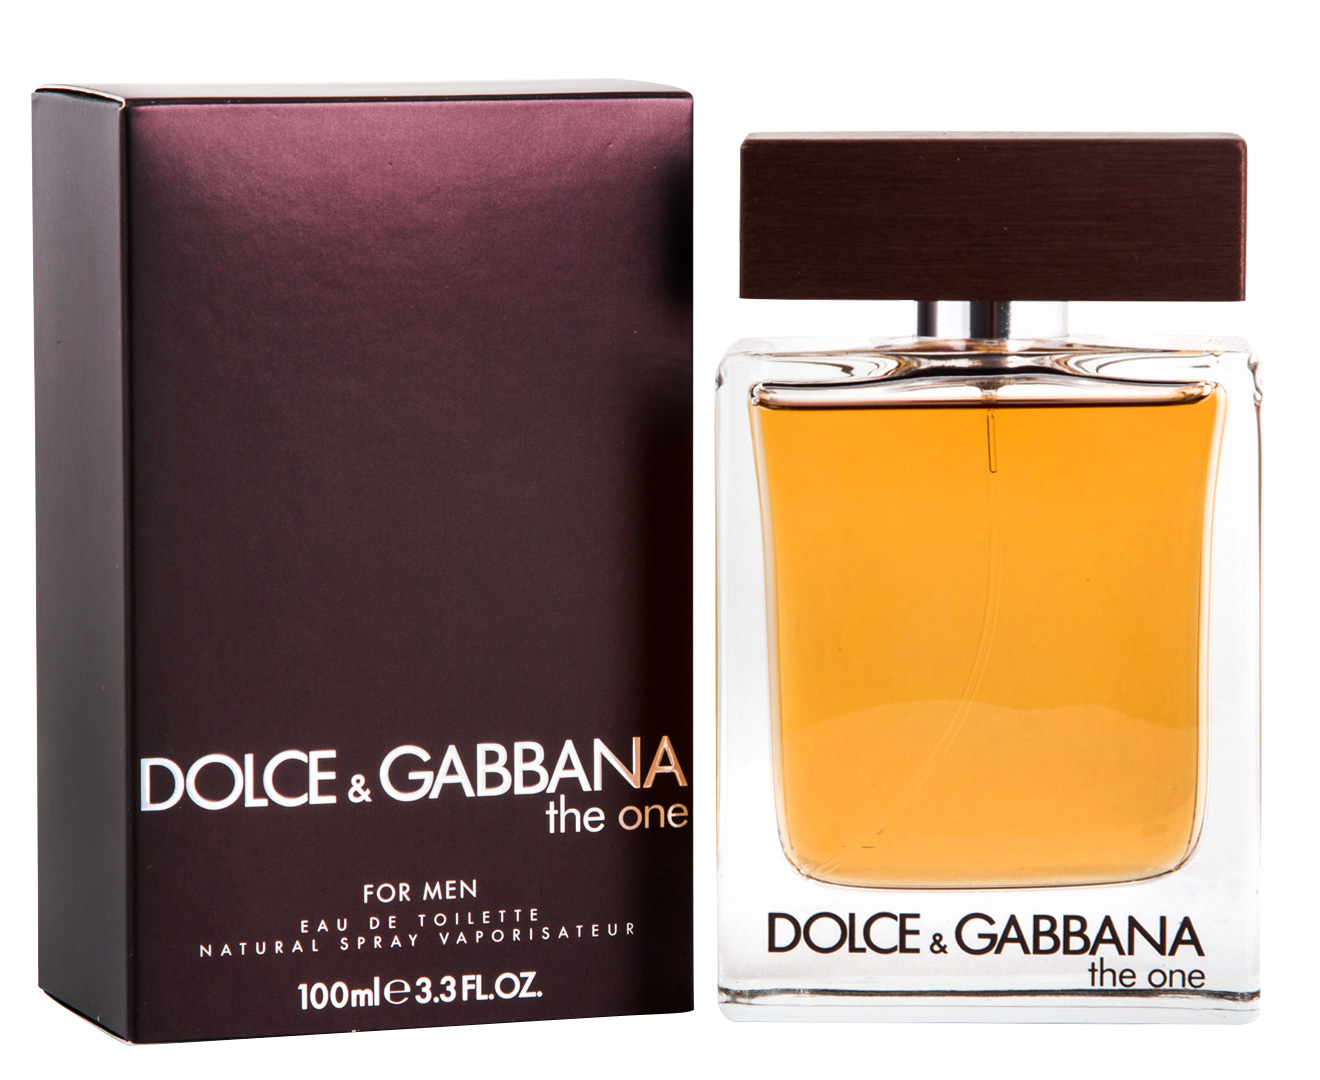 Dolce & Gabbana The One For Men EDT 100mL | Catch.com.au